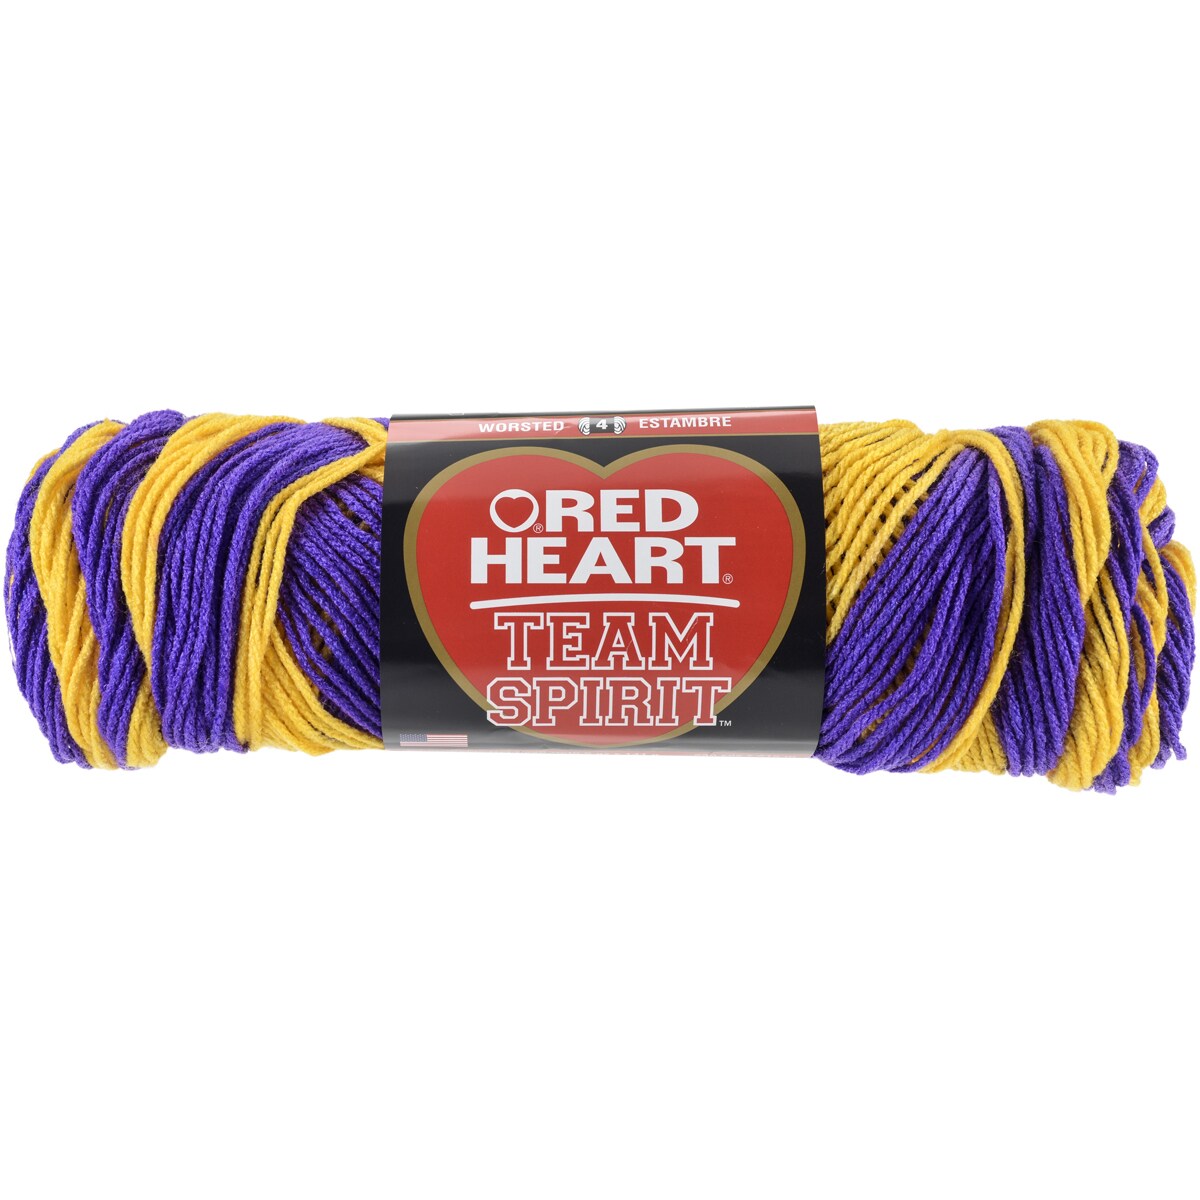 Red Heart Team Spirit Yarn-purple & Gold - image 2 of 2